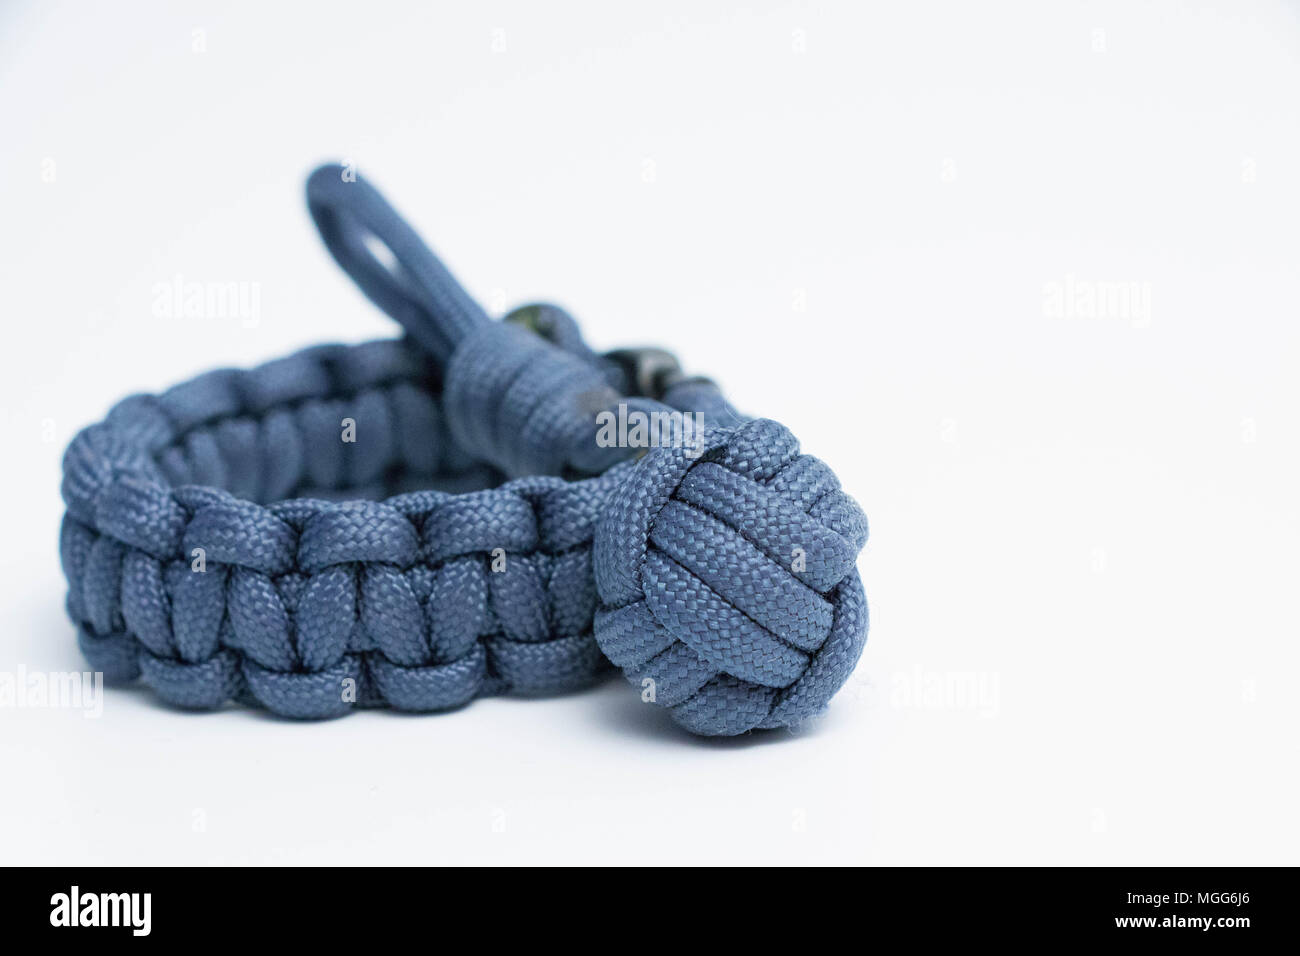 Paracord cobra Knoten Armband Armband mit Monkey fist Stockfotografie -  Alamy